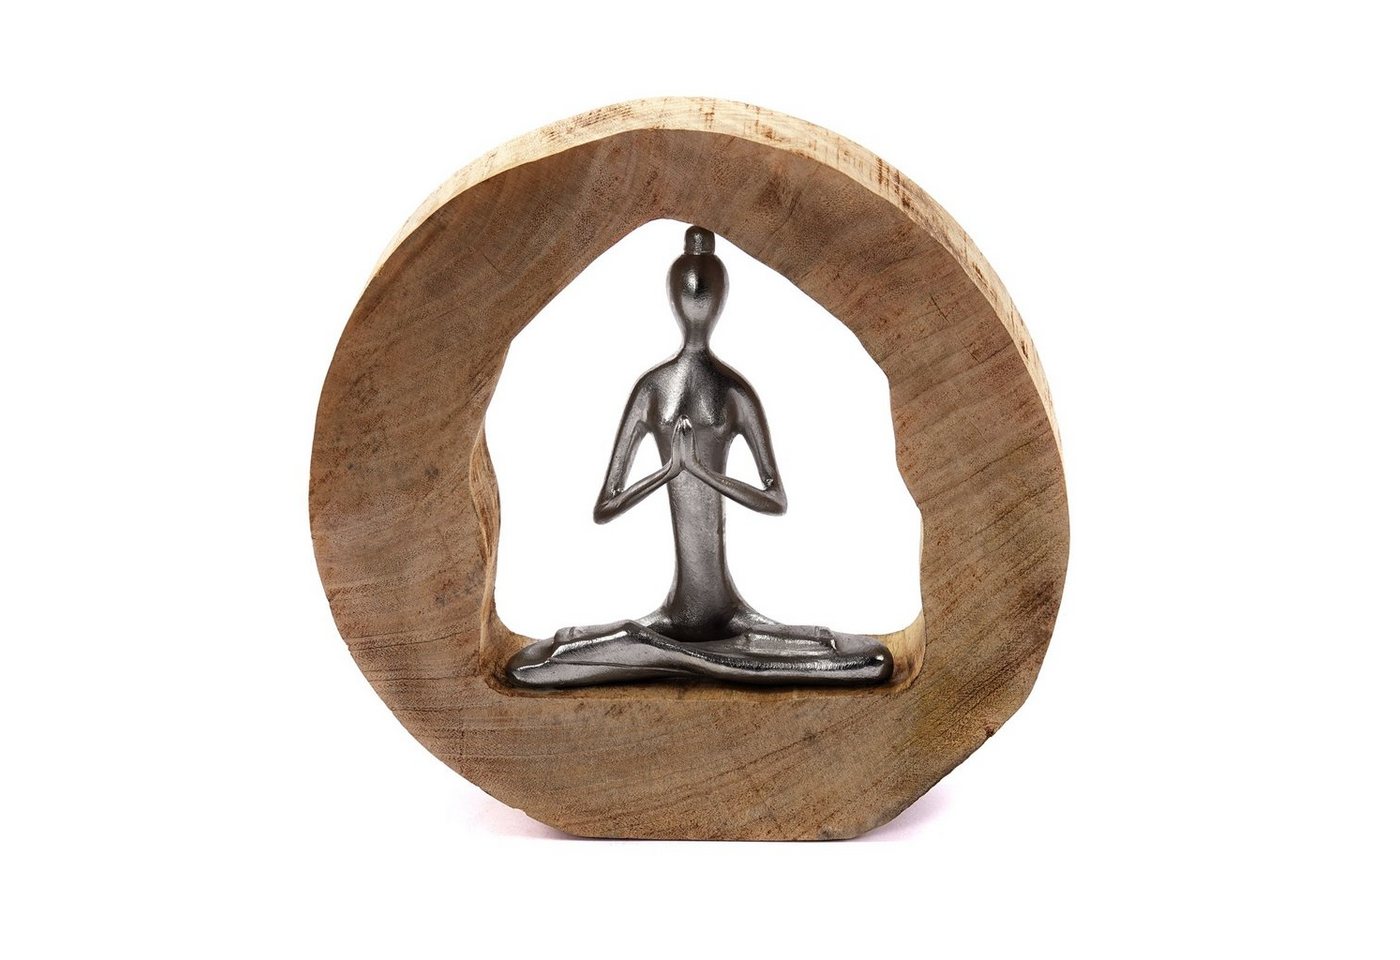 CREEDWOOD Skulptur SKULPTUR YOGA LOG", Mangoholz / Alu, 28cm, Meditierende Yoga Deko" von CREEDWOOD